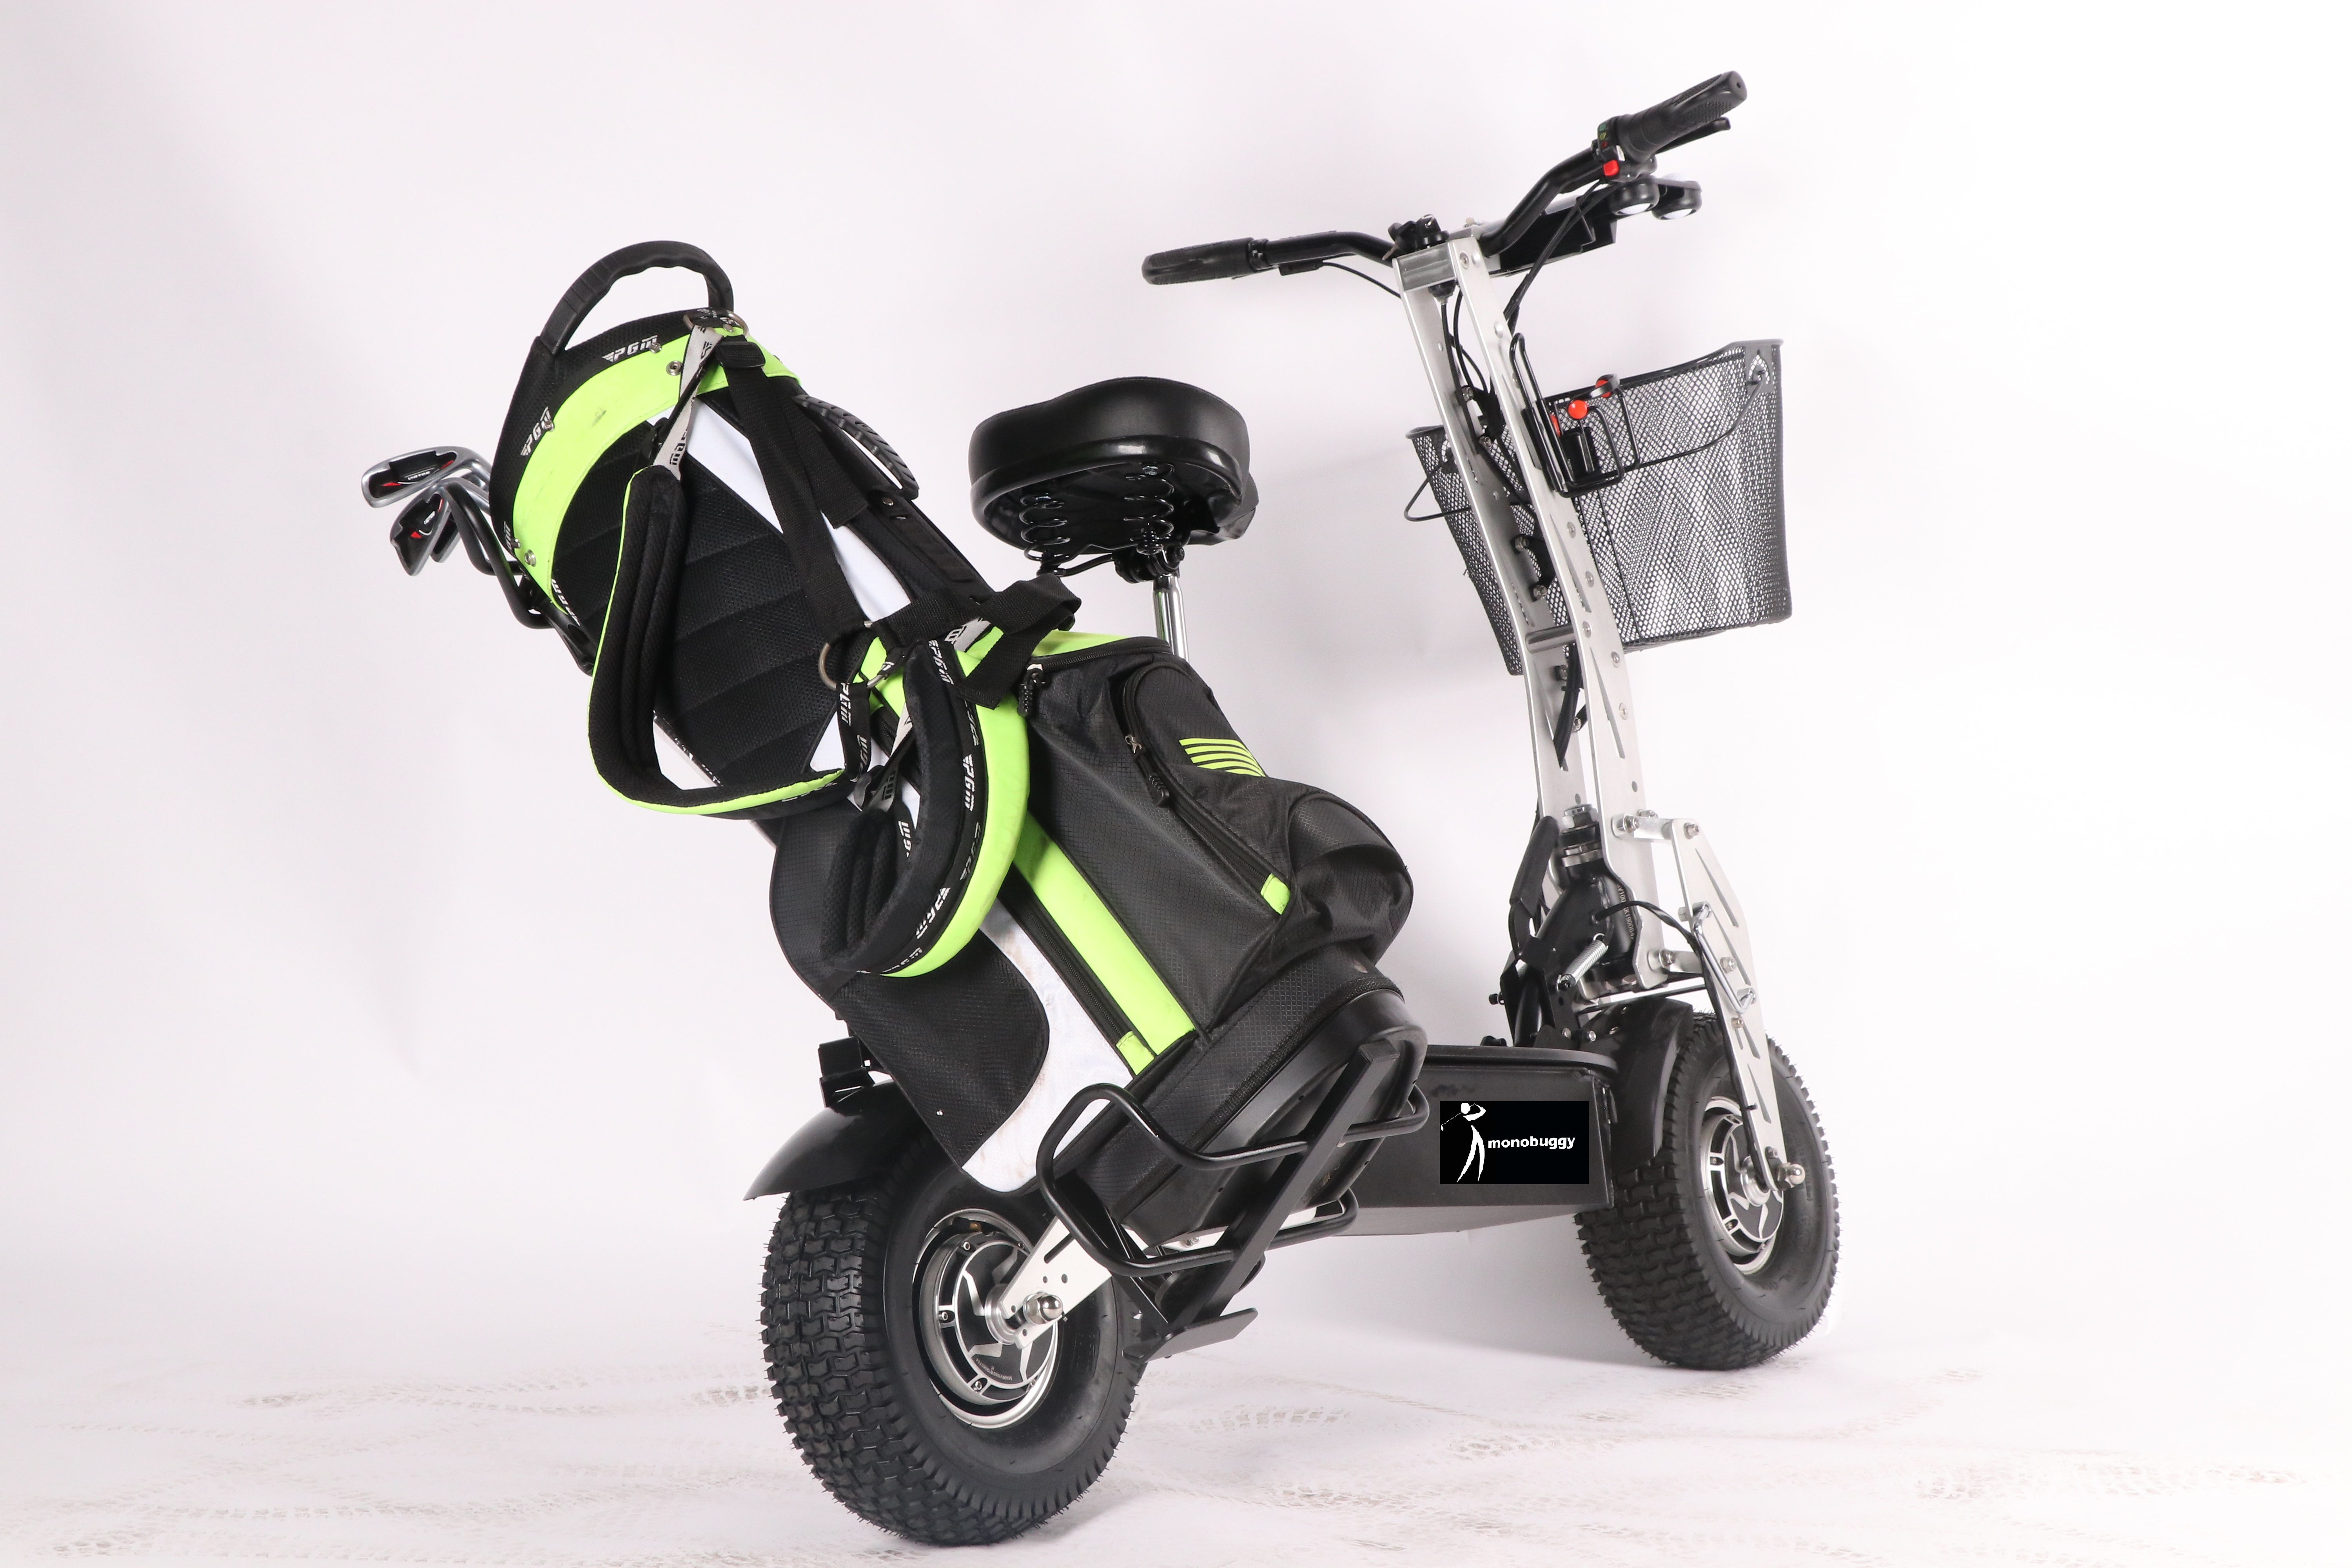 foldable golf buggy